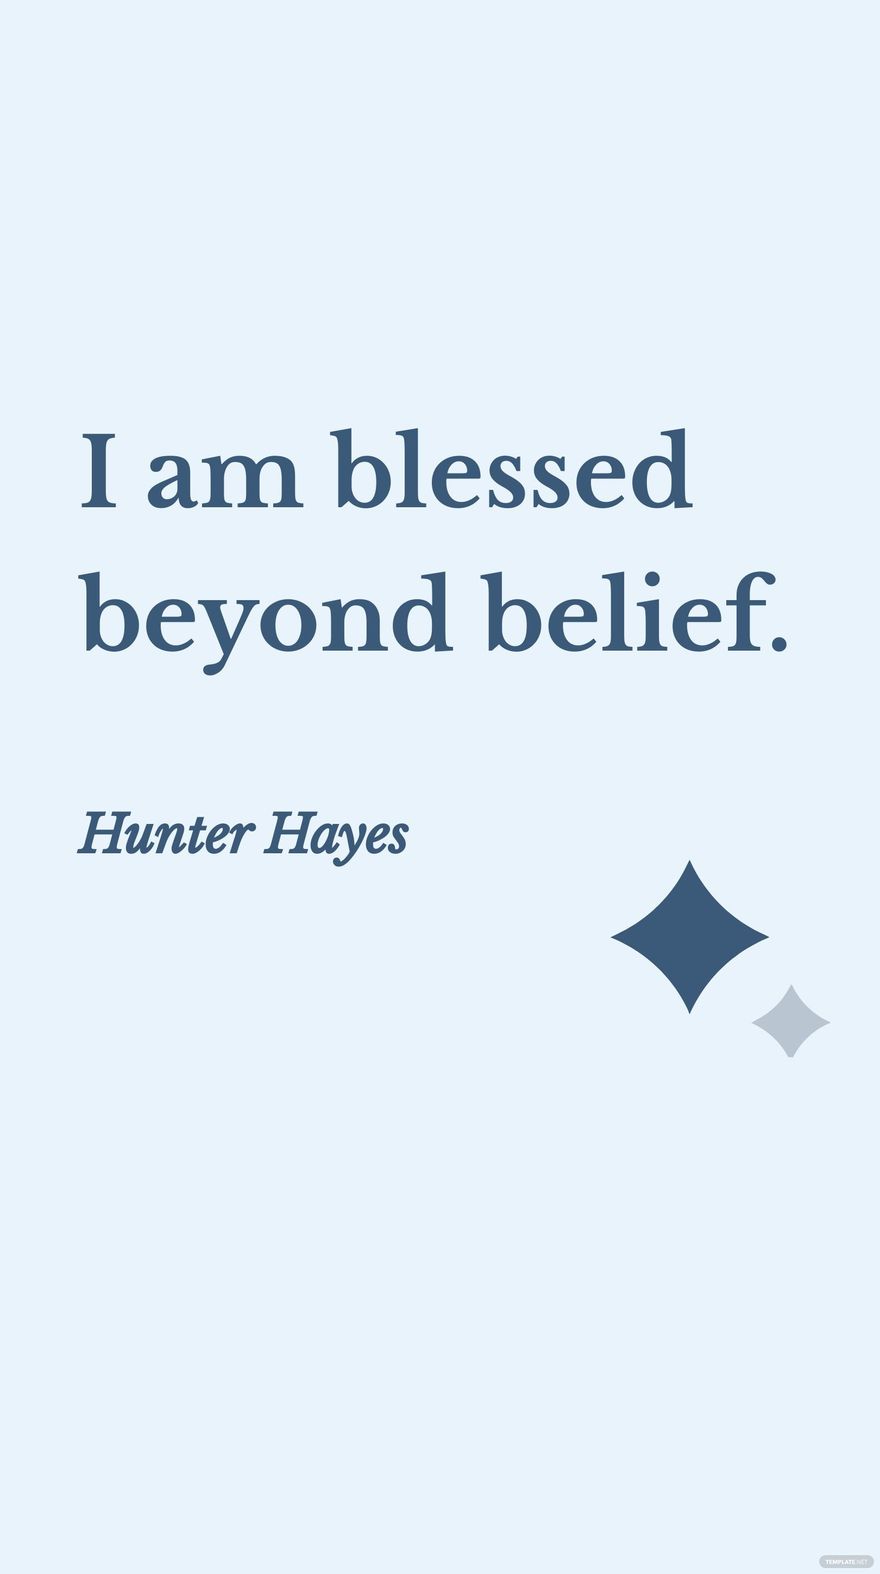 Hunter Hayes - I am blessed beyond belief. in JPG